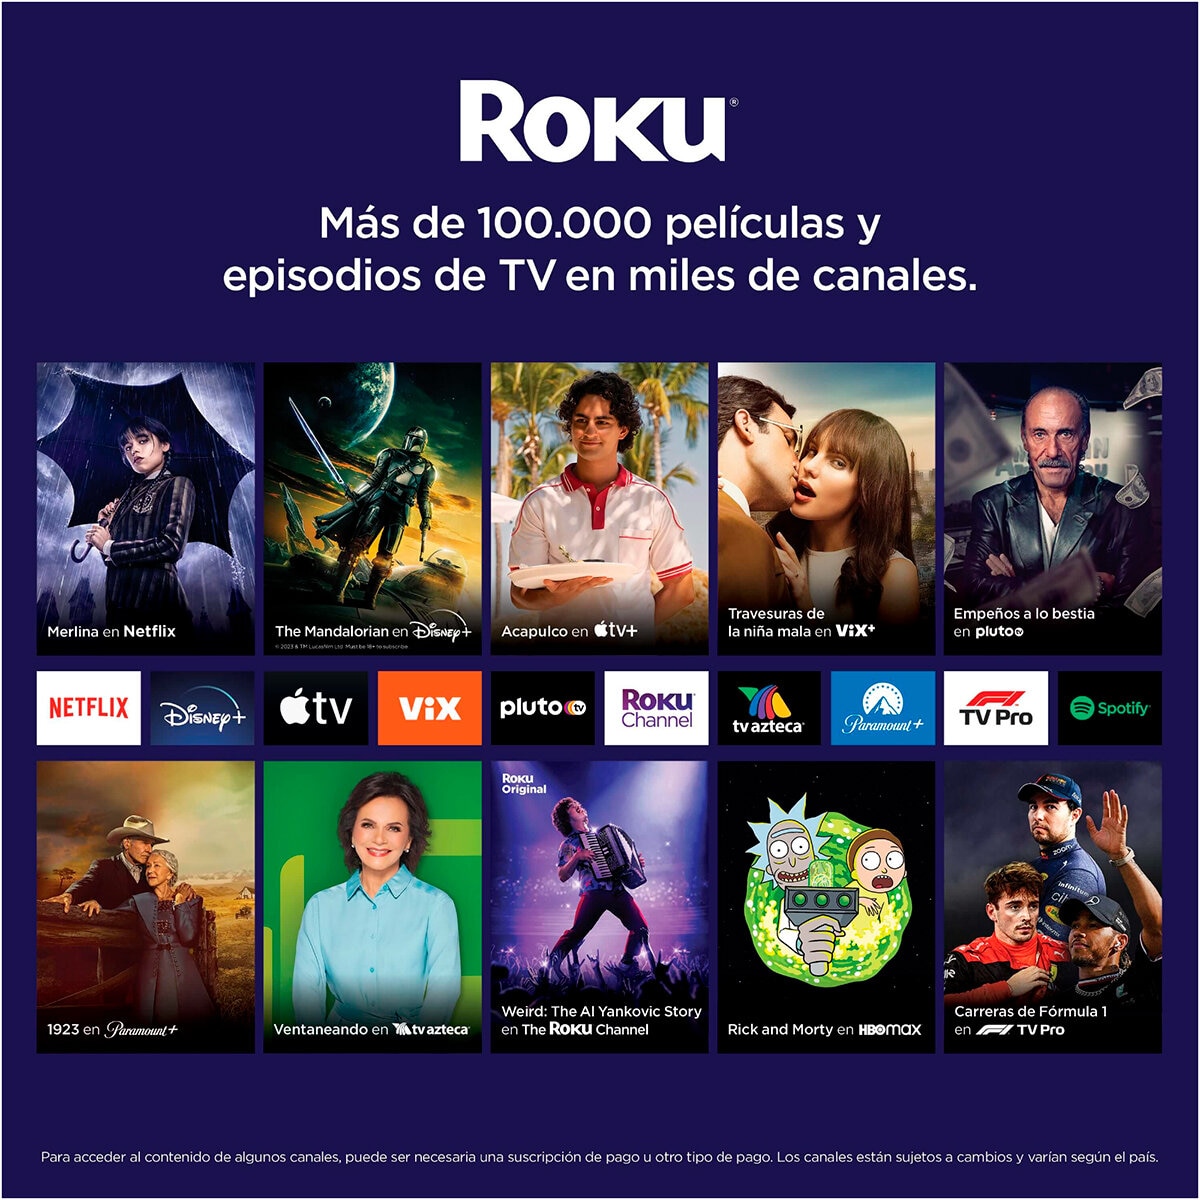 Roku, Paquete de 2 Reproductores de Streaming Express HD